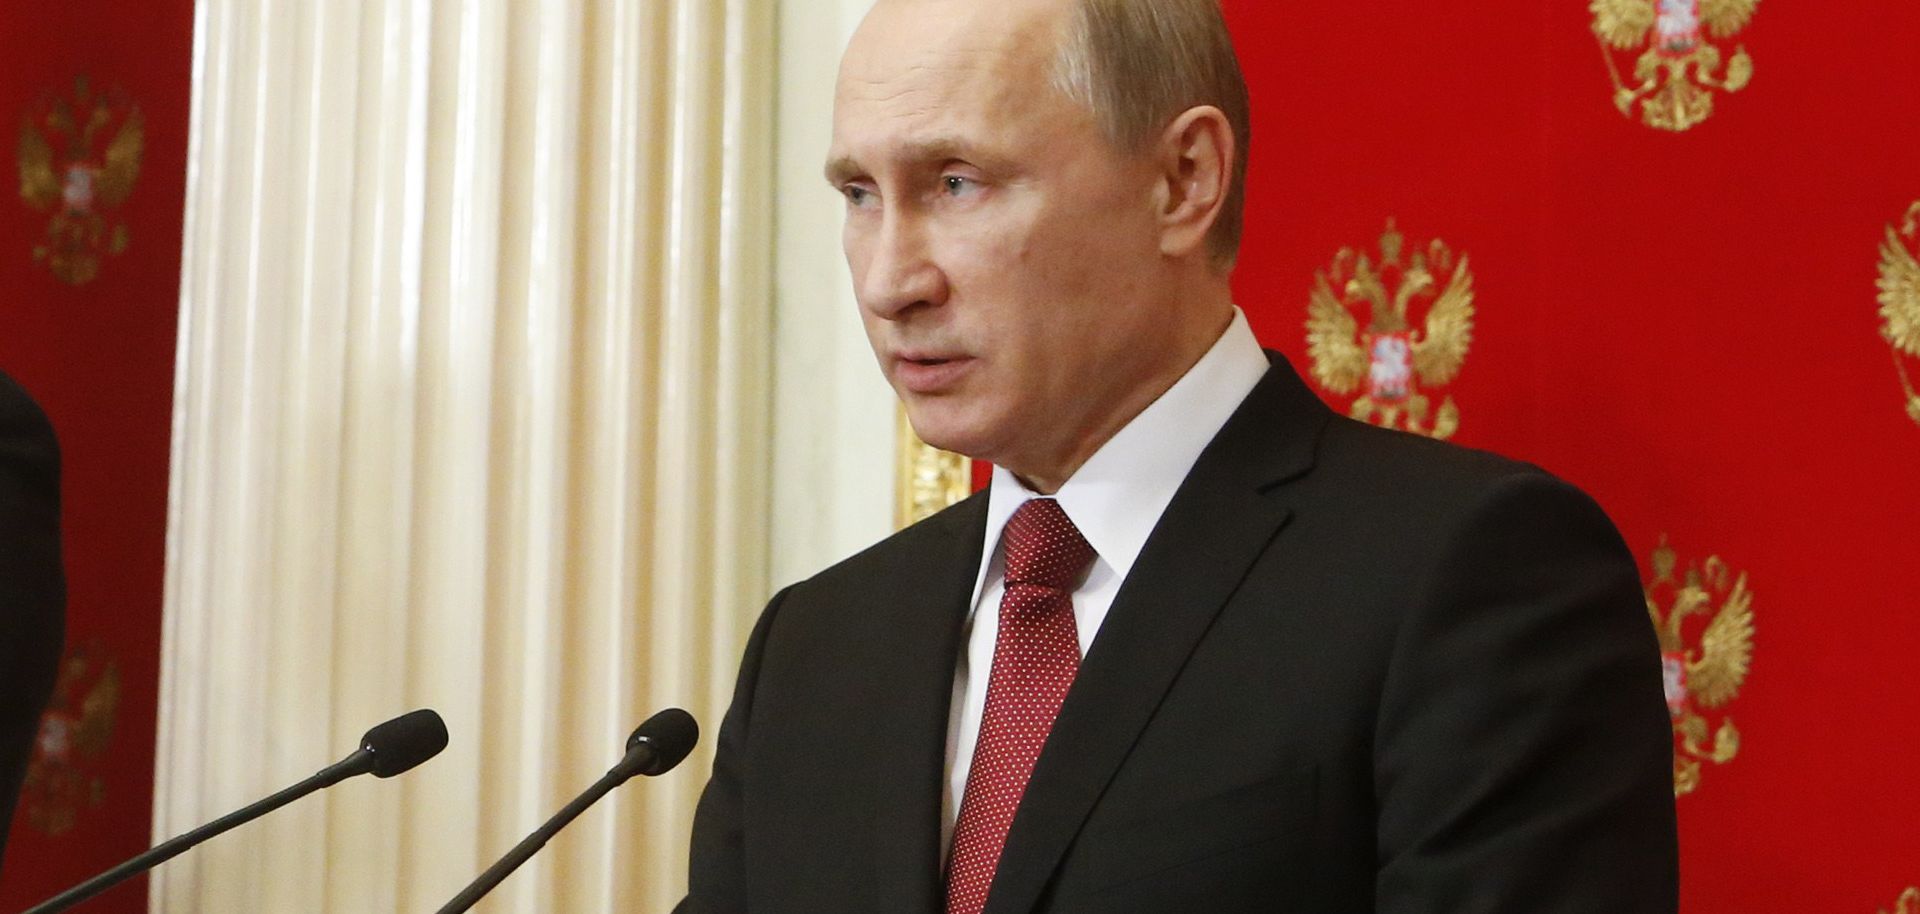 Putin's Absence Raises Questions 